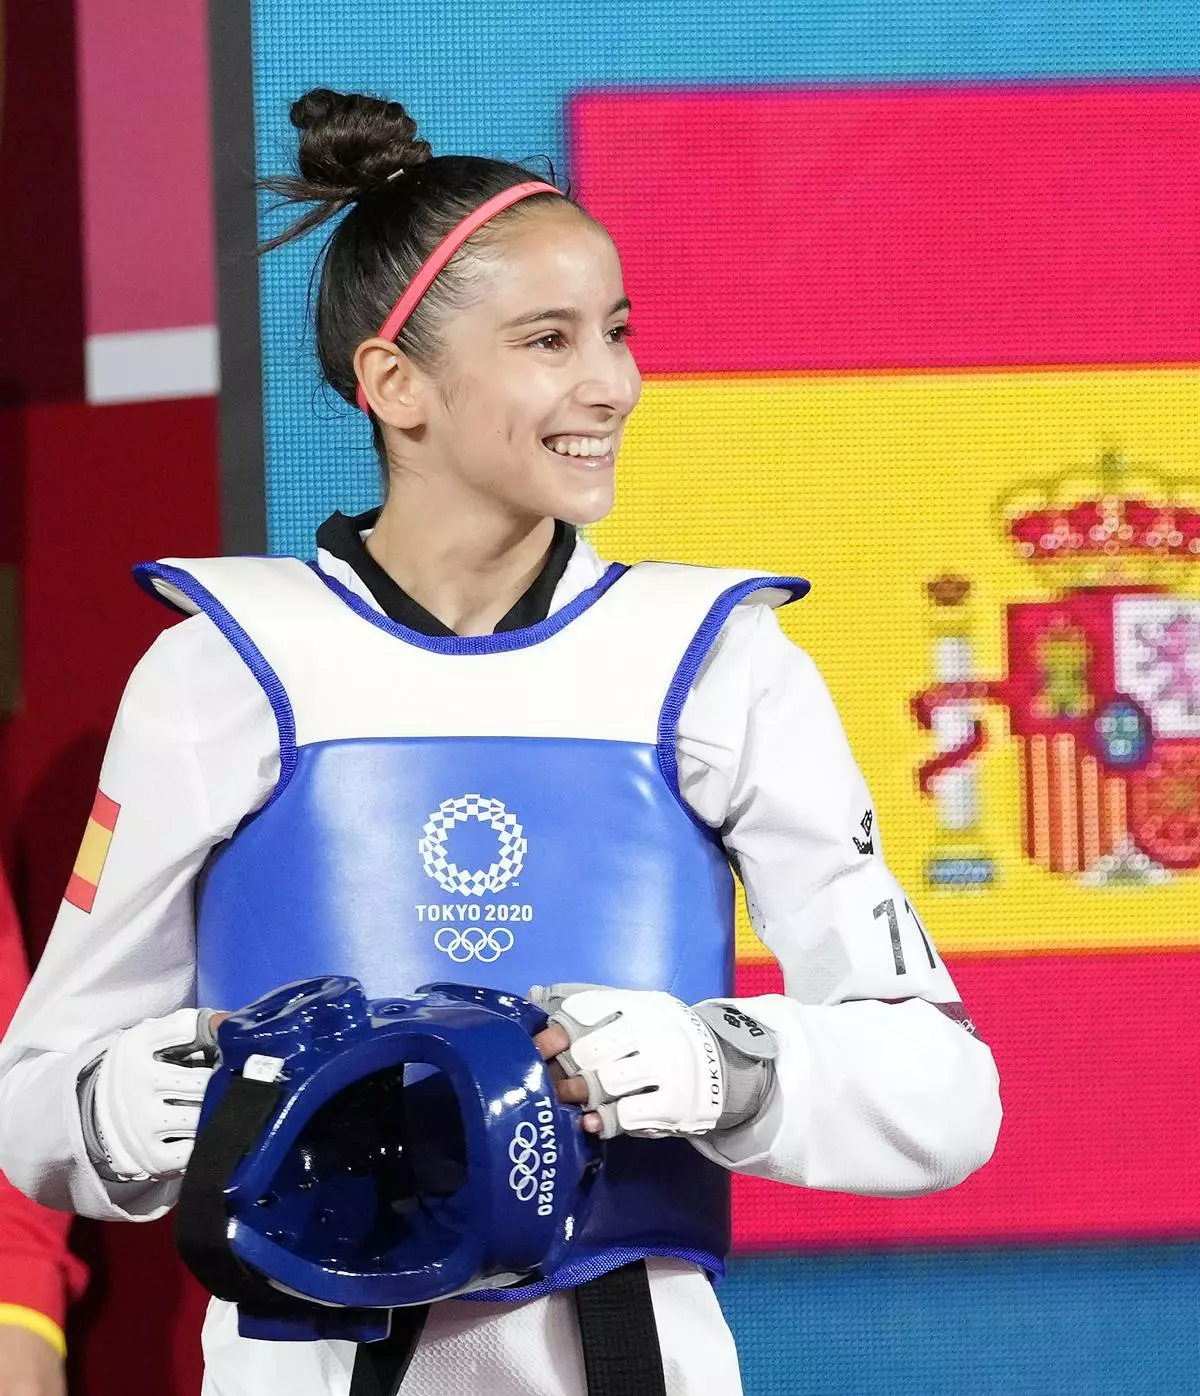 Adriana Cerezo, campeona de Europa de taekwondo